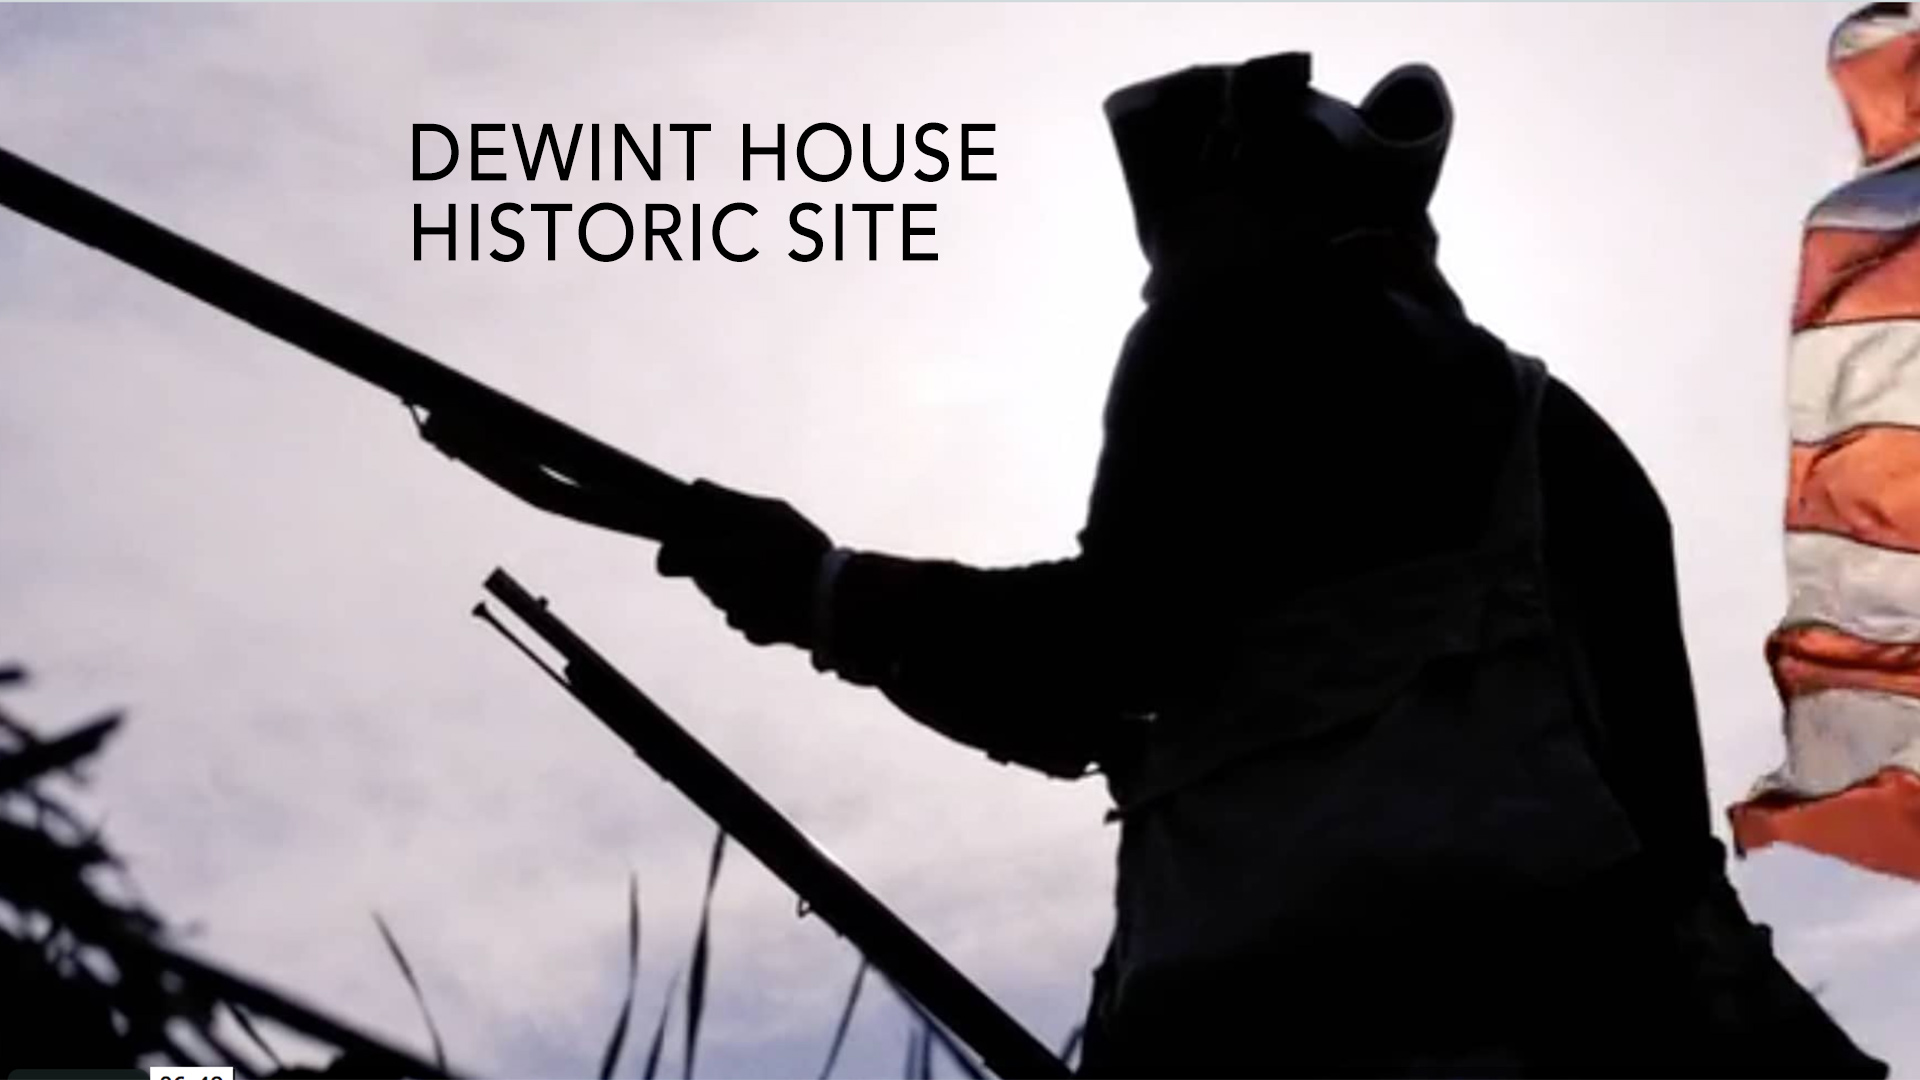 DEWINT HOUSE HISTORIC SITE